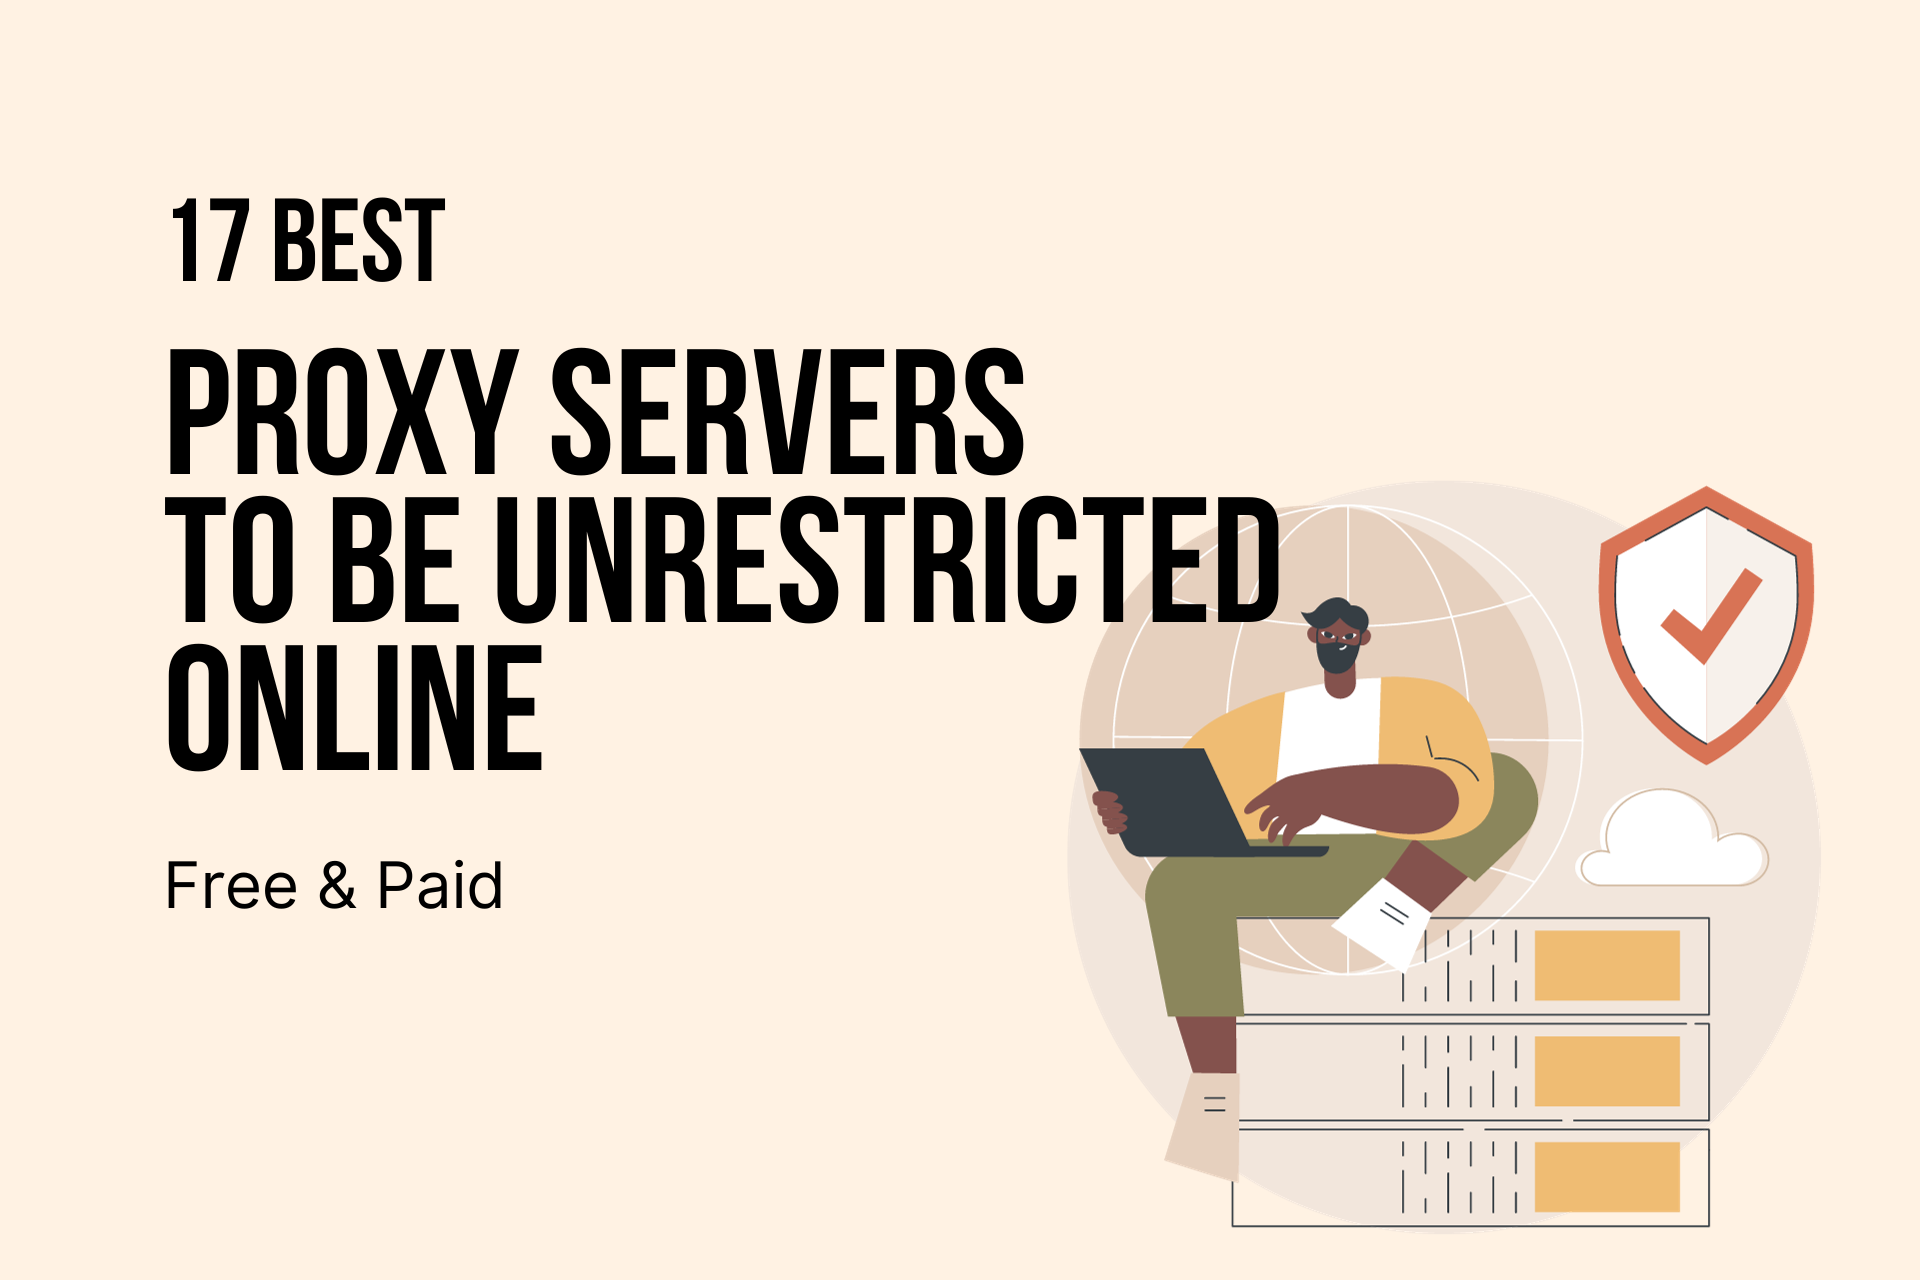 proxy servers cover image